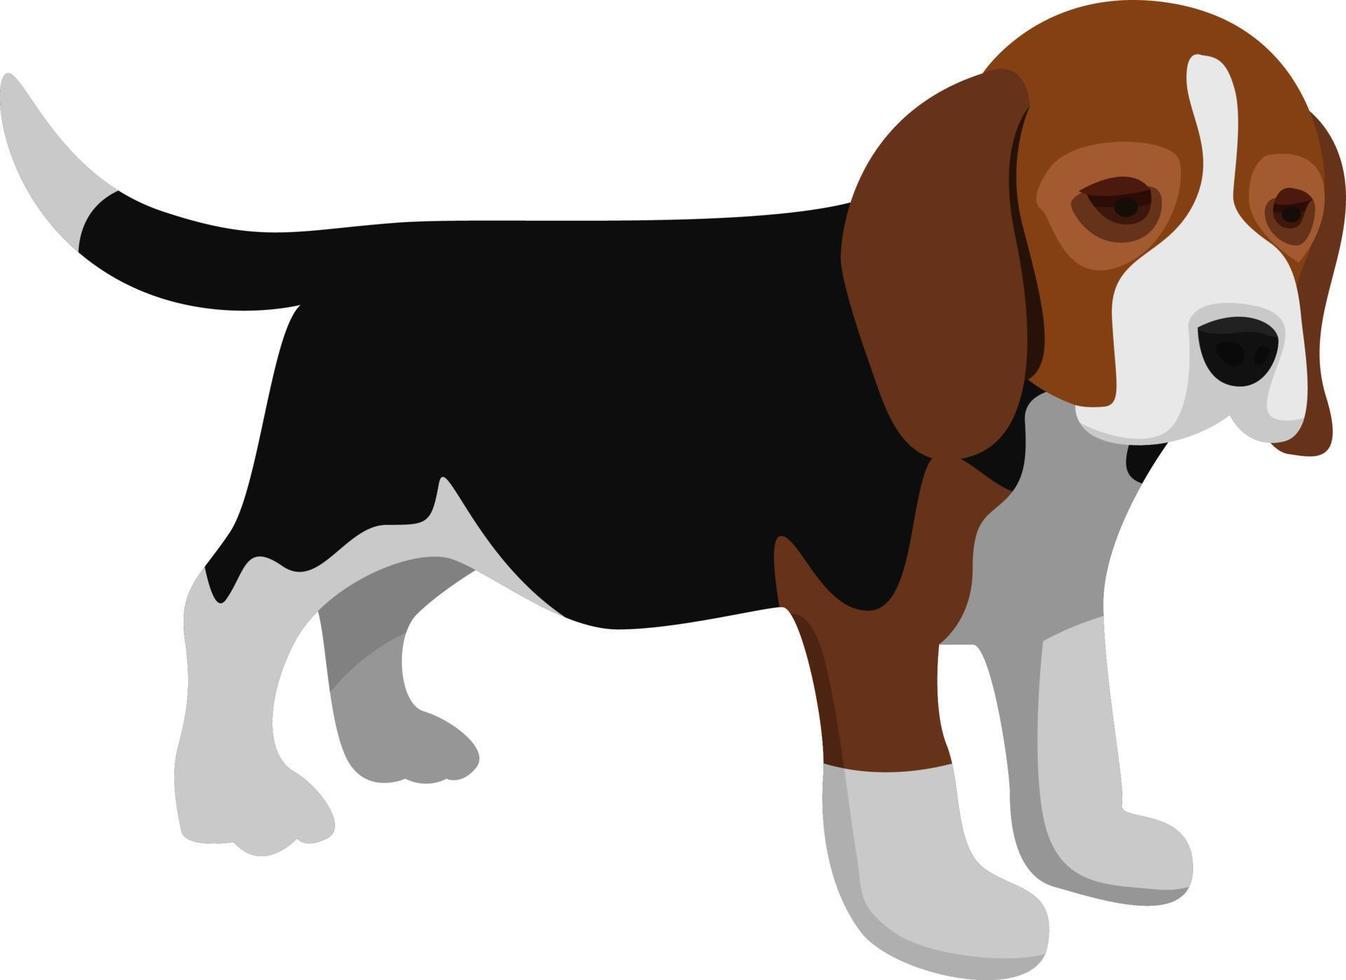 Beagle dog, illustration, vector on white background